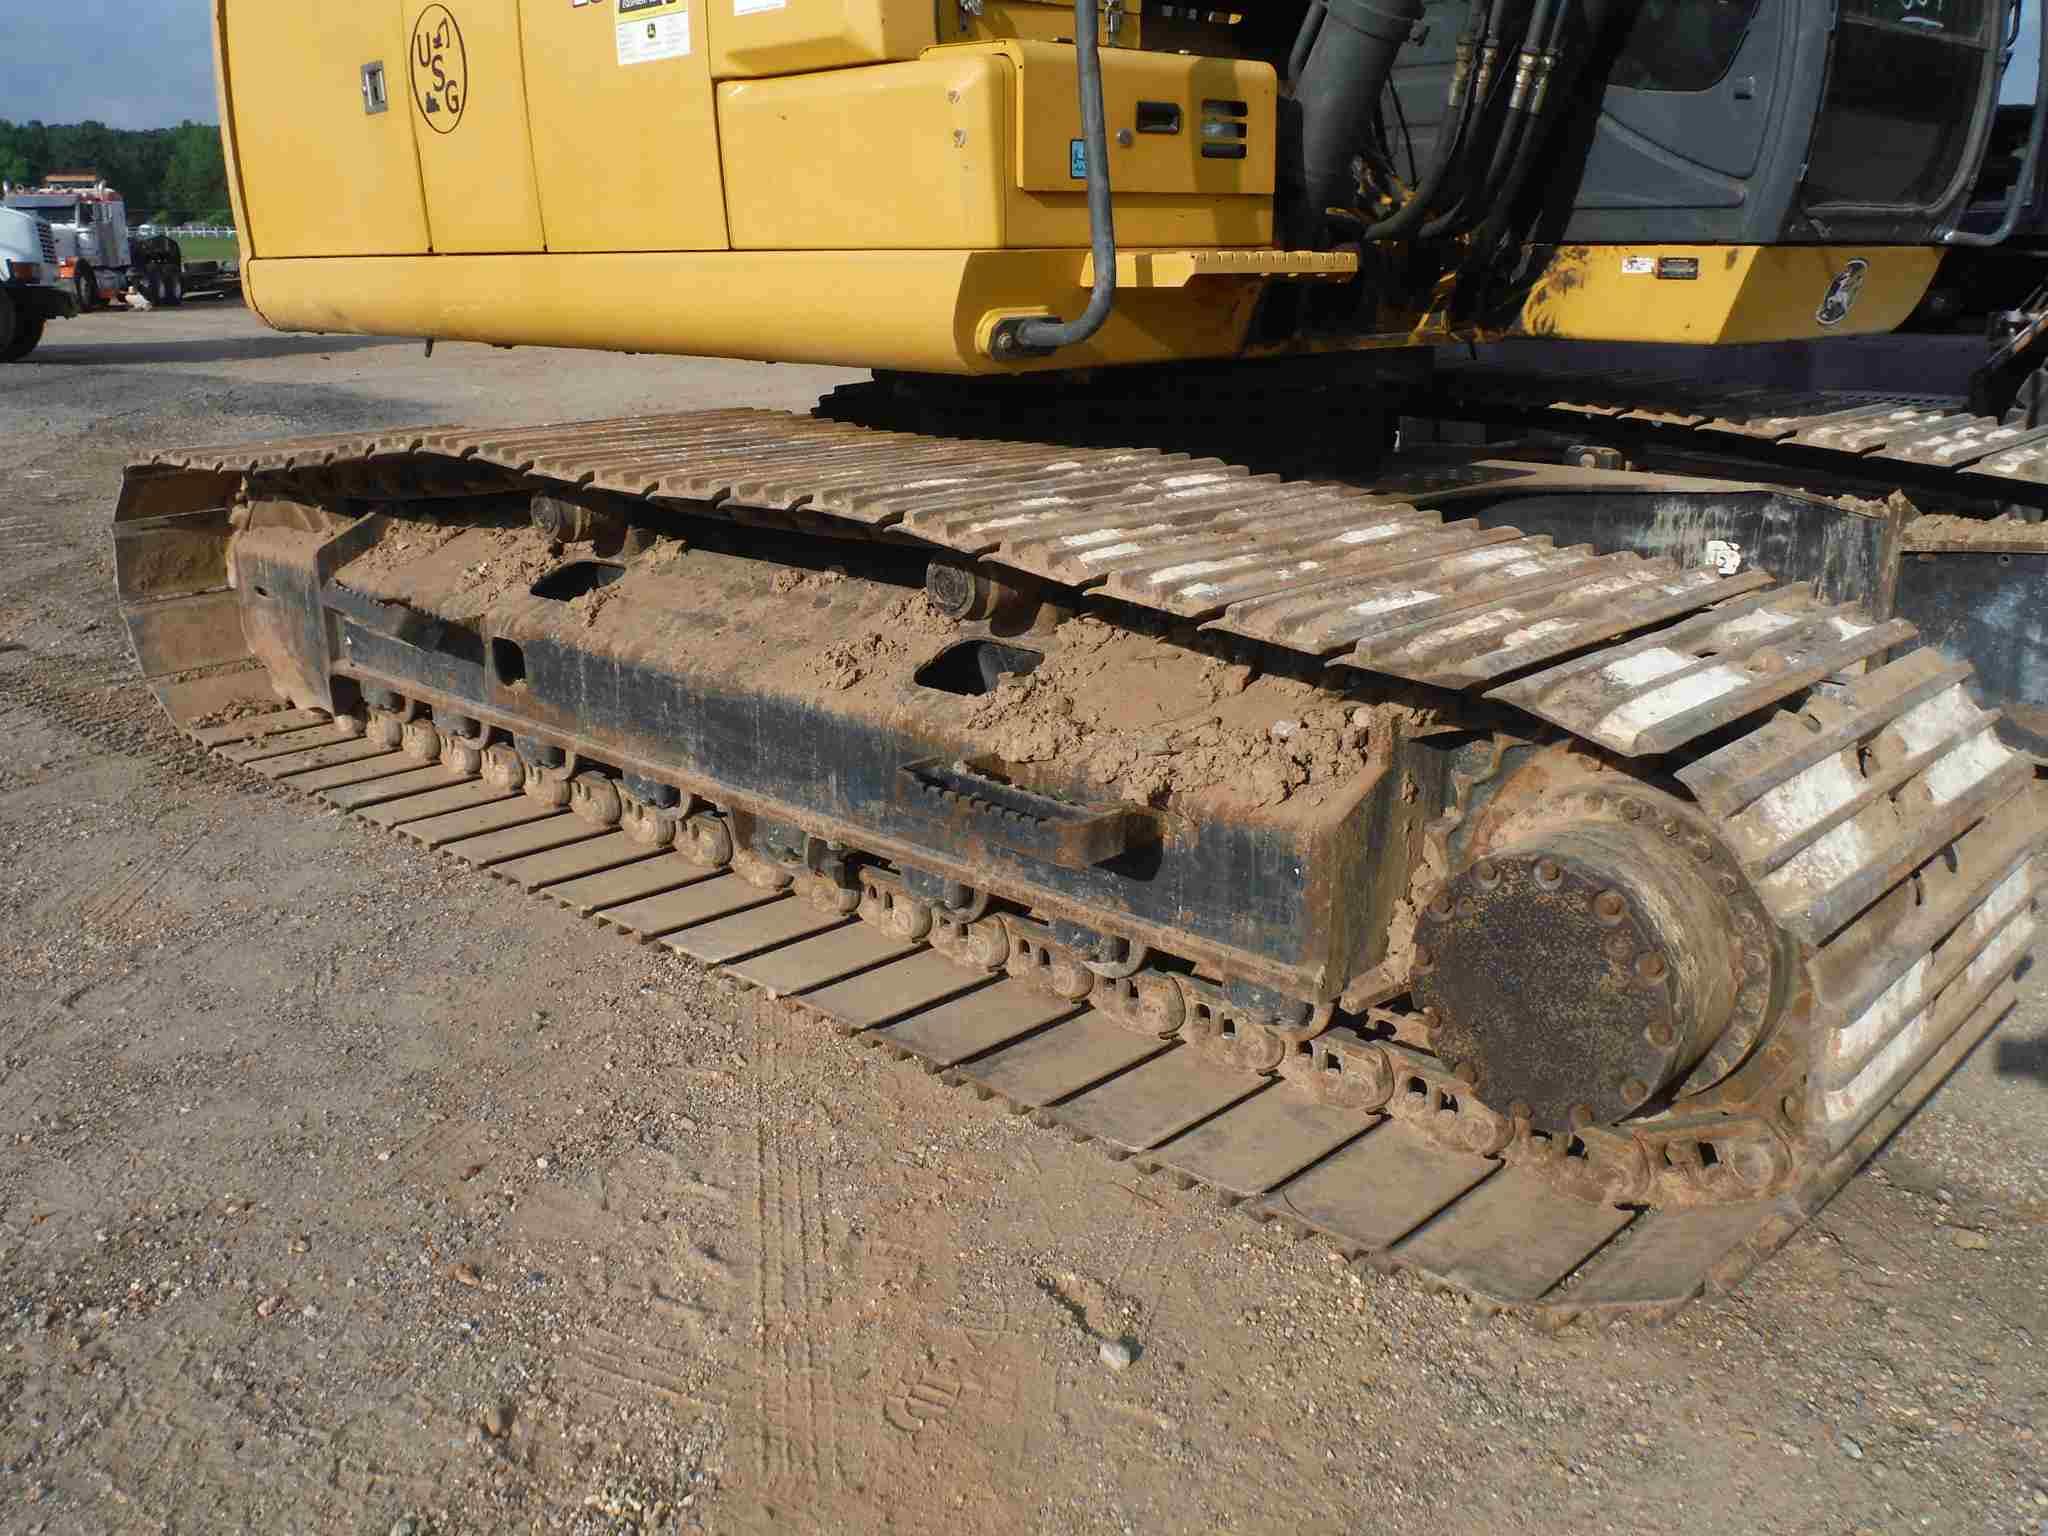 2019 John Deere 210G Excavator, s/n 525021: C/A, Manual Thumb, Meter Shows